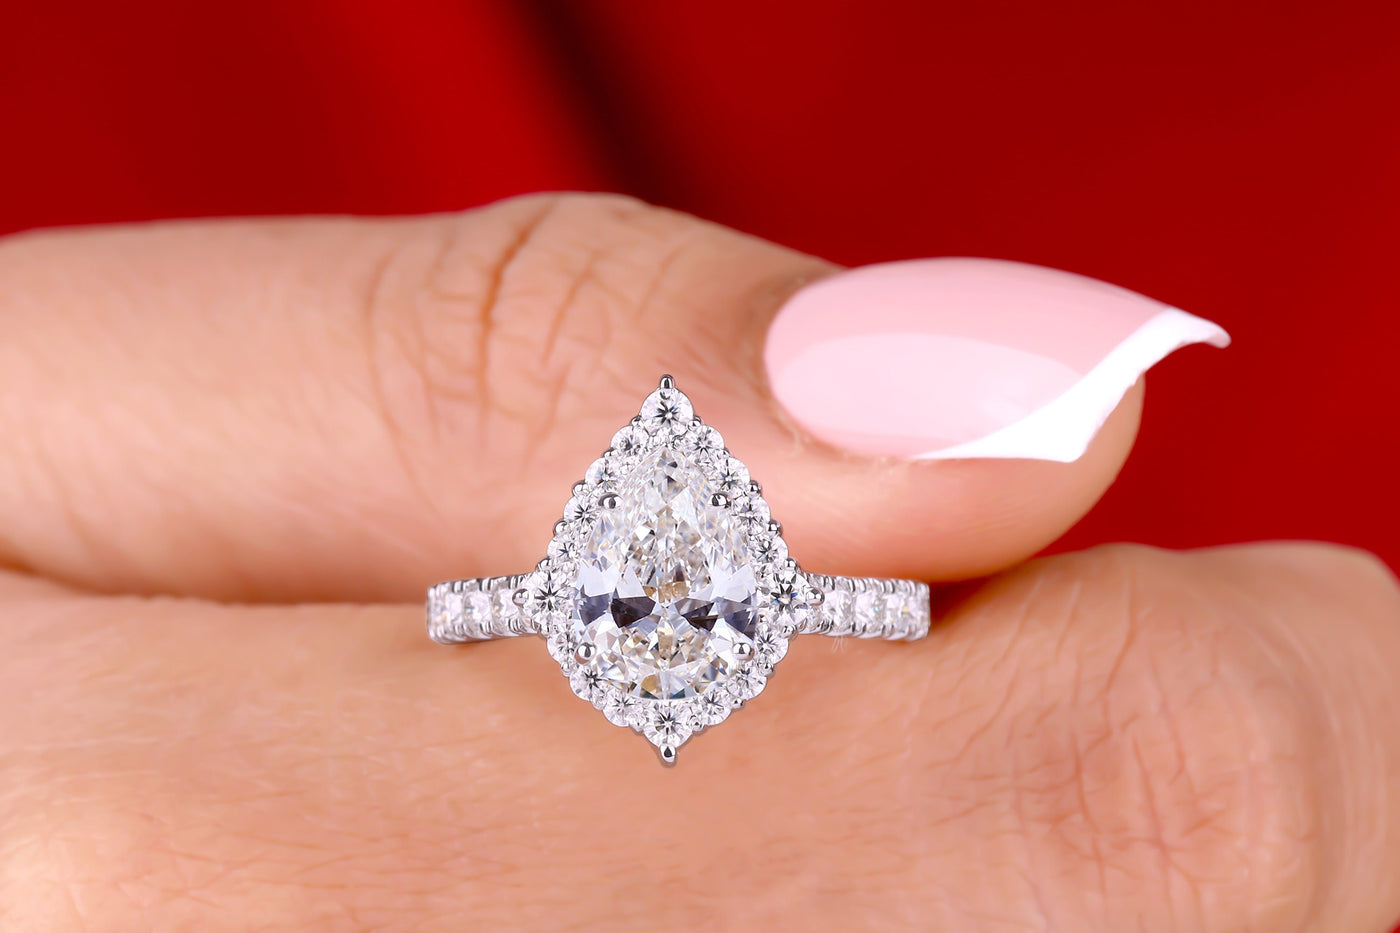 2.50 CT Pear Cut Moissanite Engagement Ring, Teardrop Bridal Ring, Halo Moissanite Wedding Ring, 14K White Gold Ring, Pear Halo Promise Ring